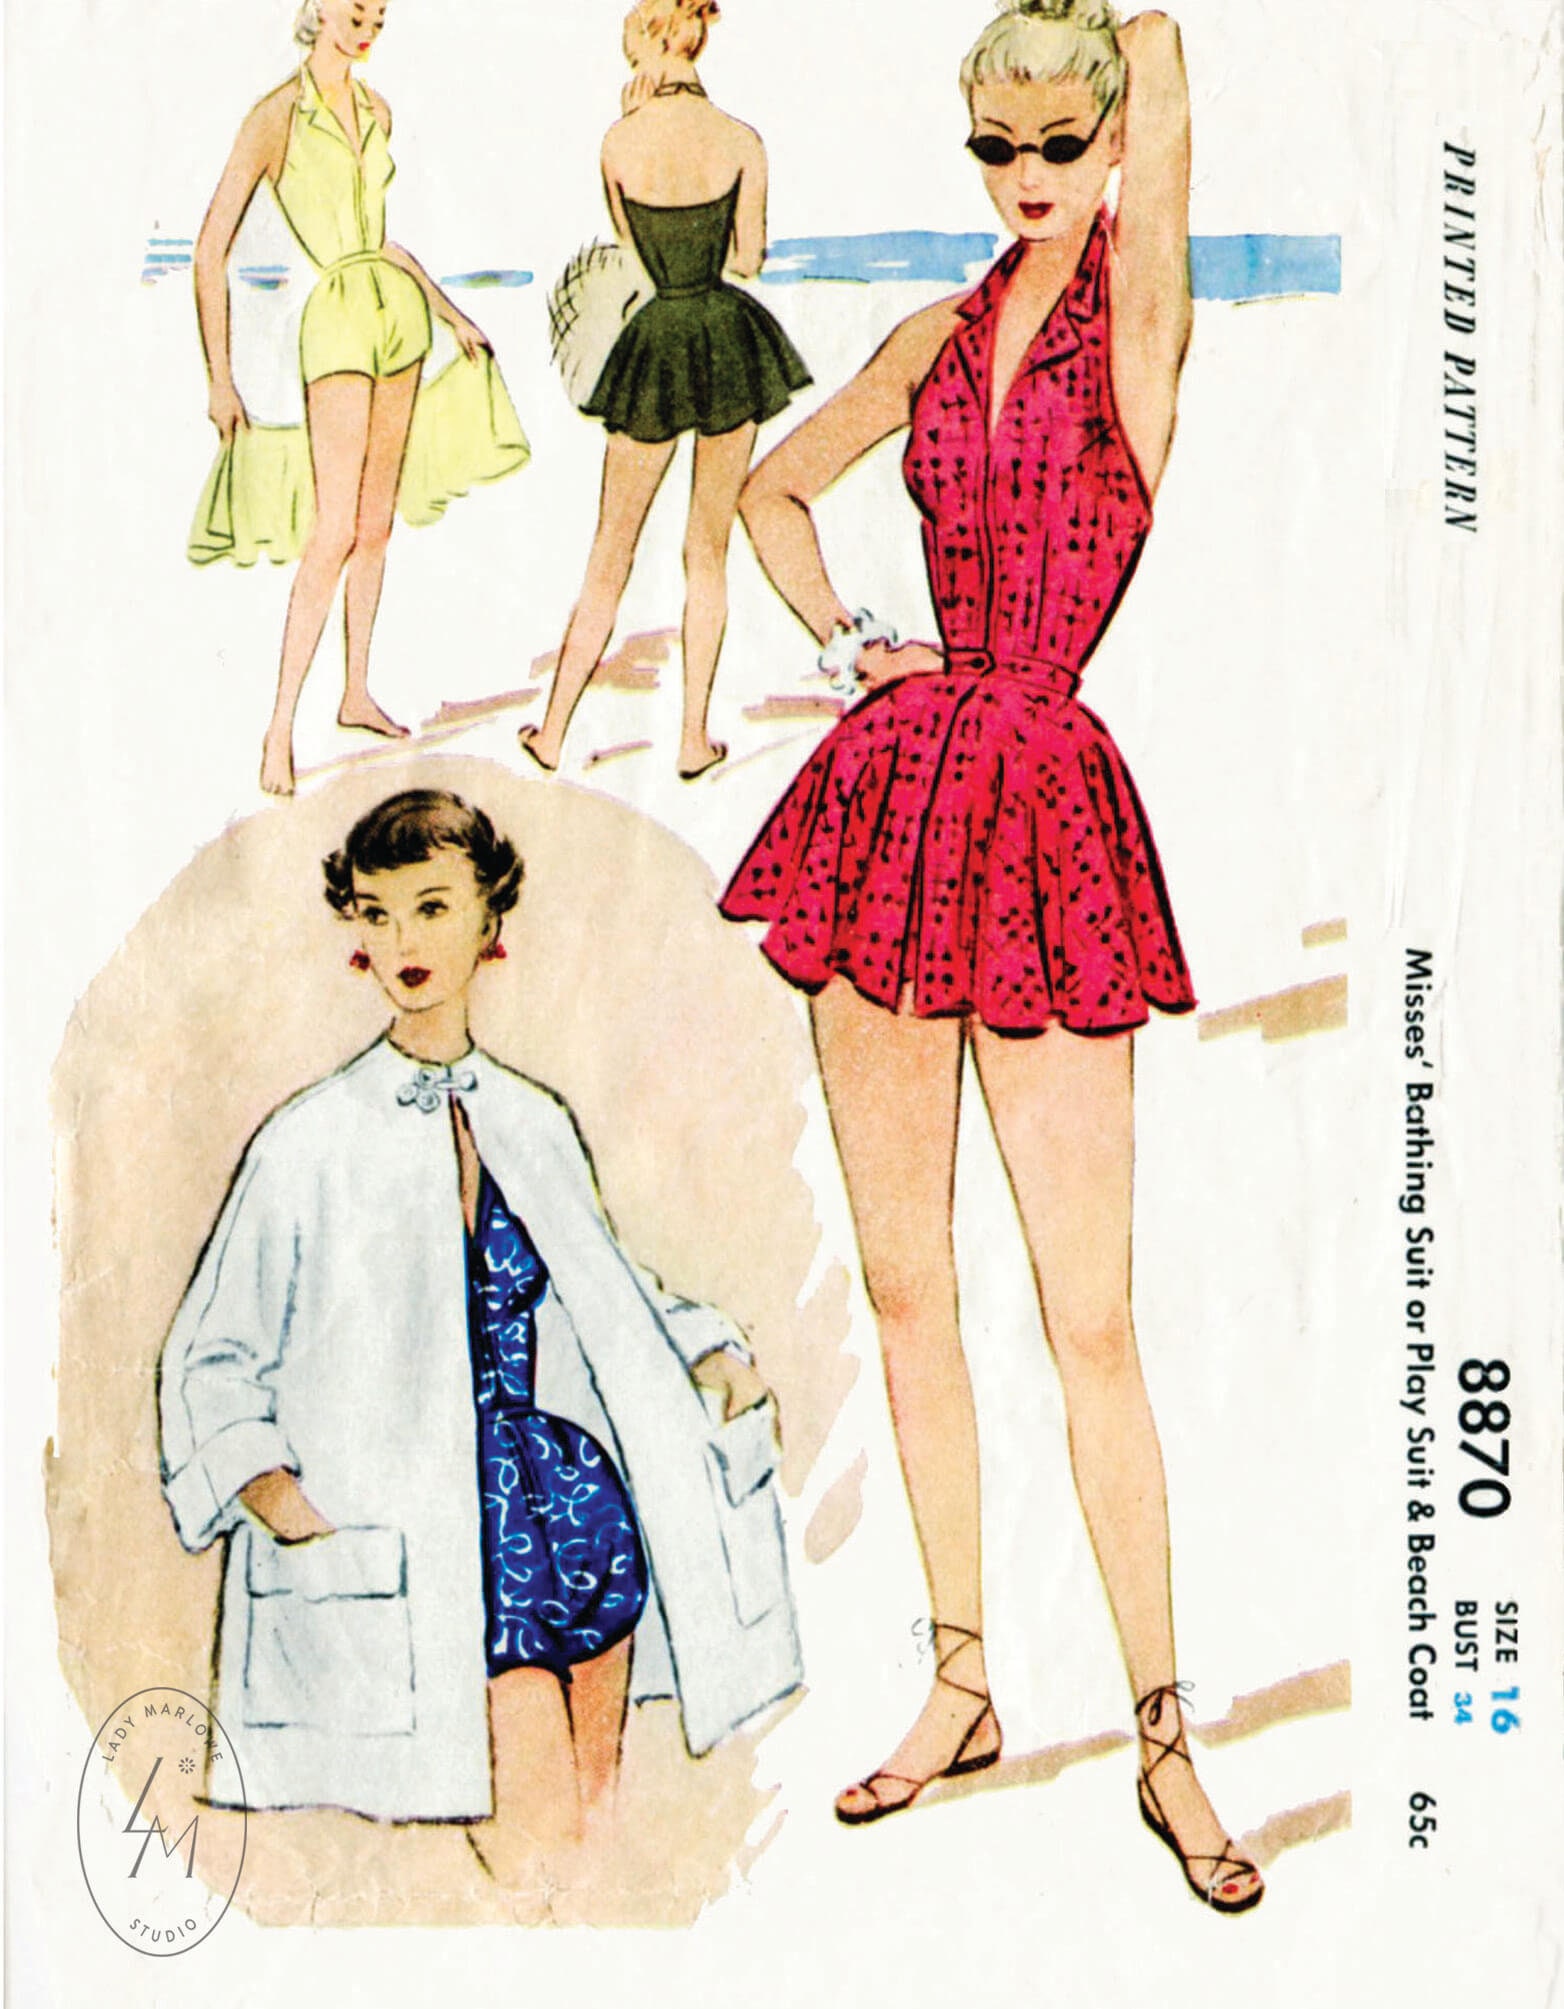 Black Cherry Bikini Cherries Swimsuit Rockabilly Psychobilly Fifties 50s  1950s Inspired Fashion Cute Swimwear Matching Top Bottoms Set -  UK